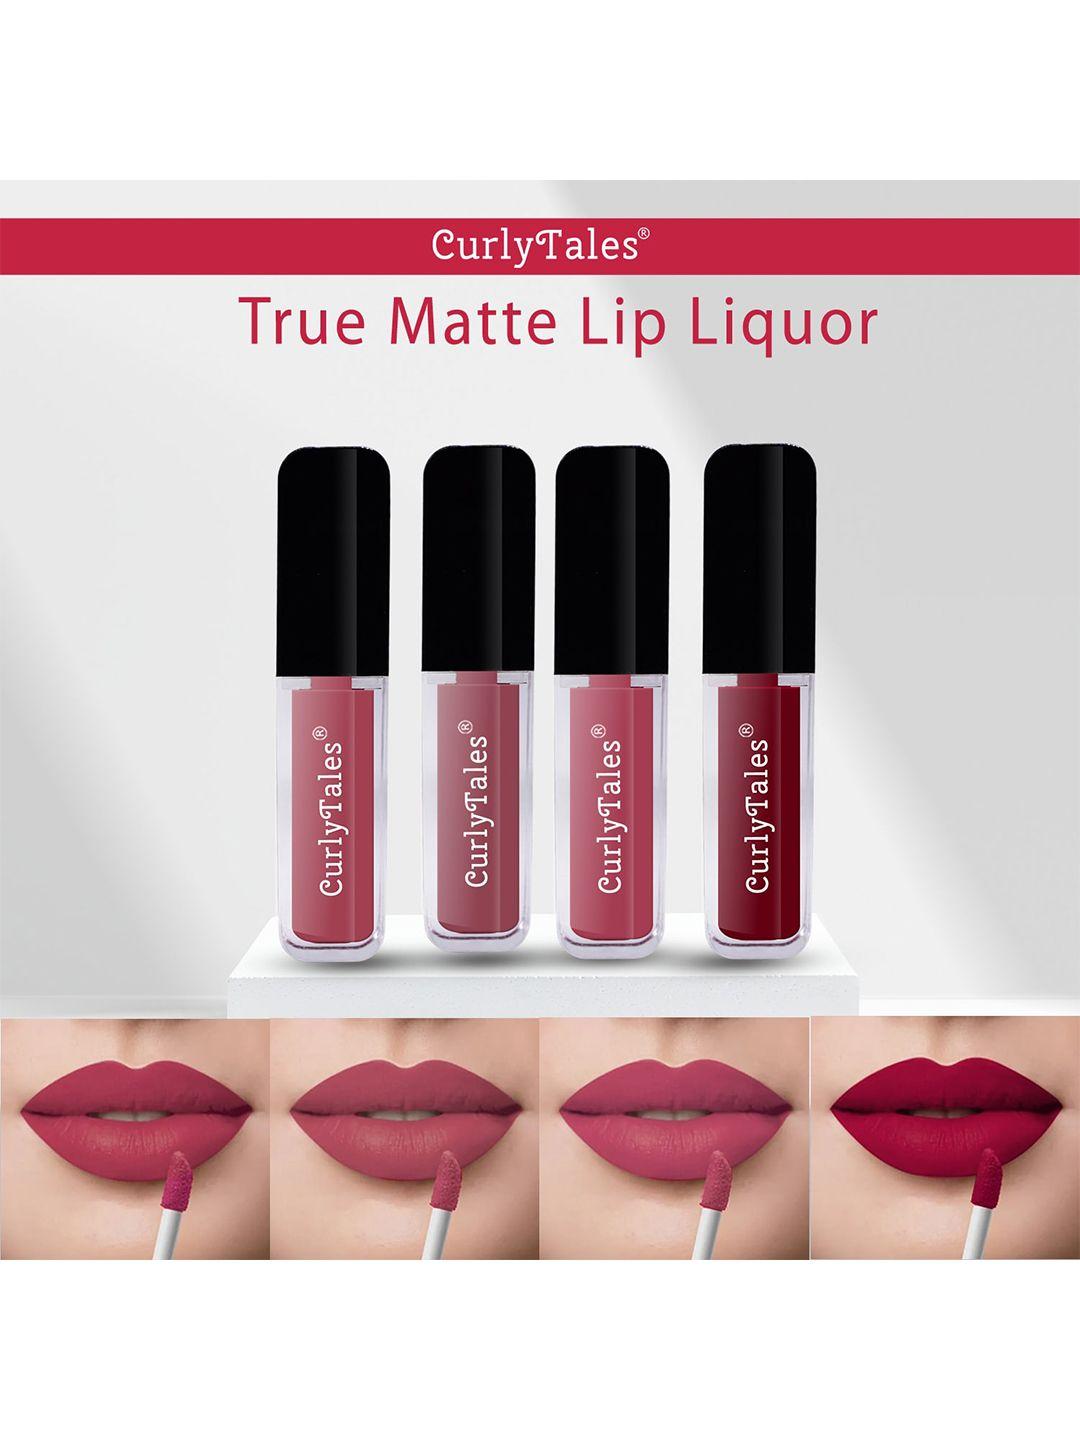 curlytales set of 4 long lasting vegan paraben free liquid matte lipsticks 12ml each